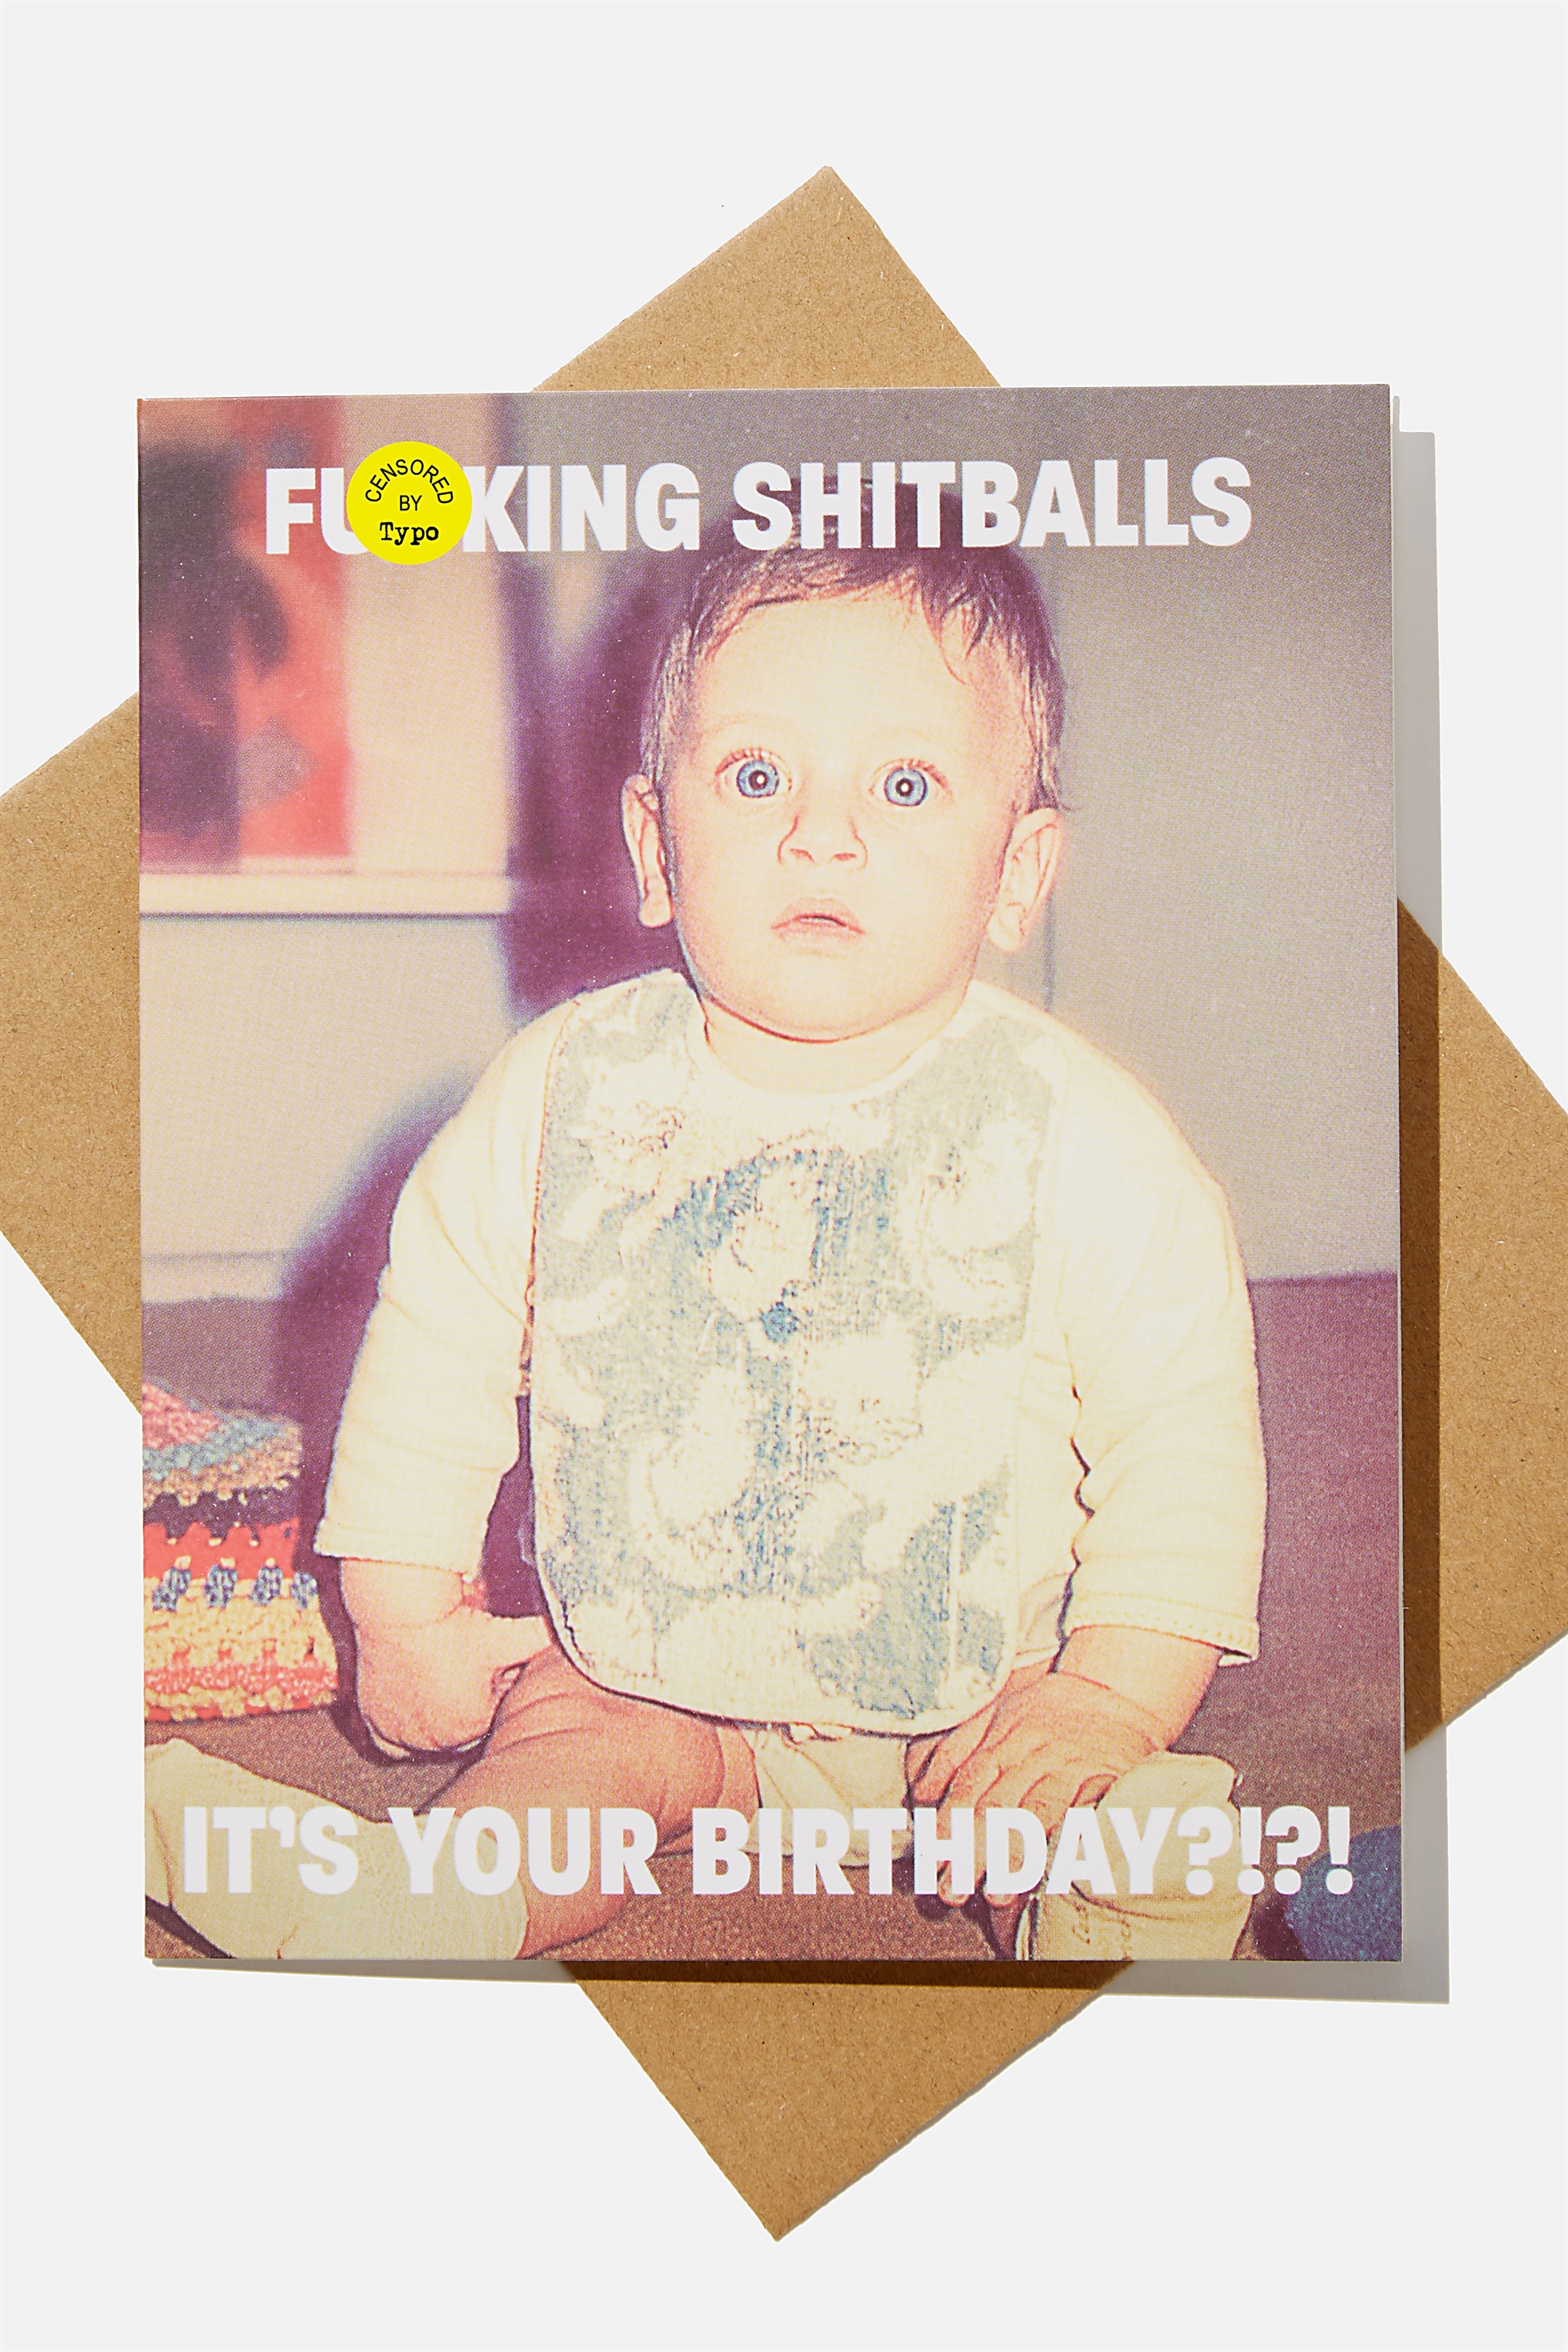 Typo - Funny Birthday Card - F*cking shitballs its your birthday!!